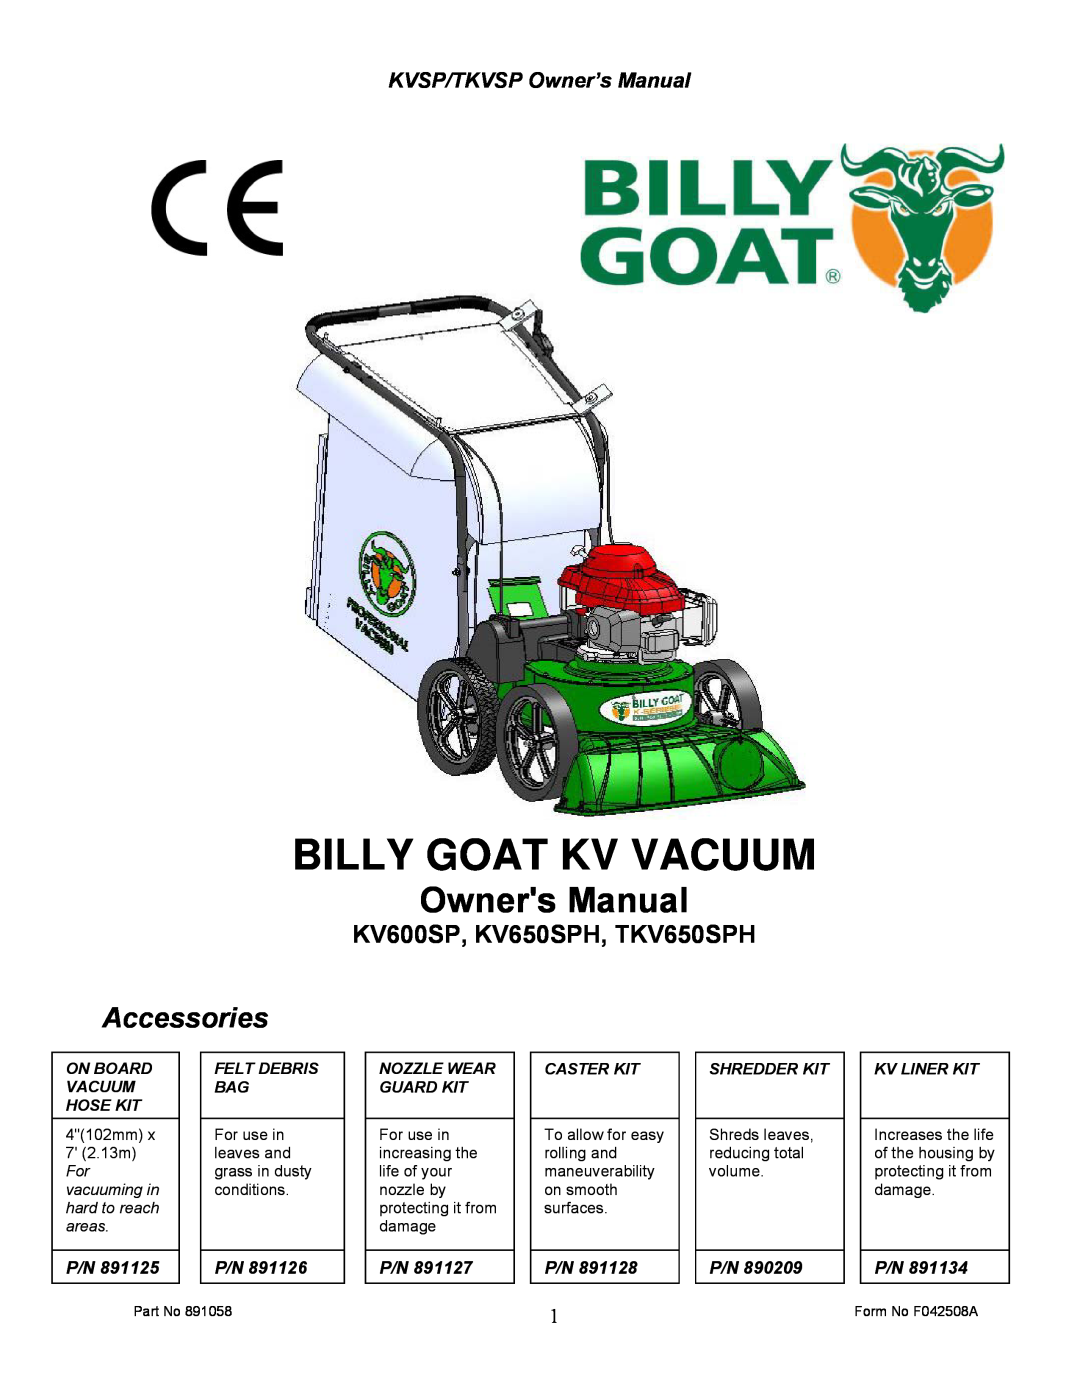 Billy Goat F042508A owner manual KV600SP, KV650SPH, TKV650SPH, KVSP/TKVSP Owner’s Manual, Billy Goat Kv Vacuum, Caster Kit 